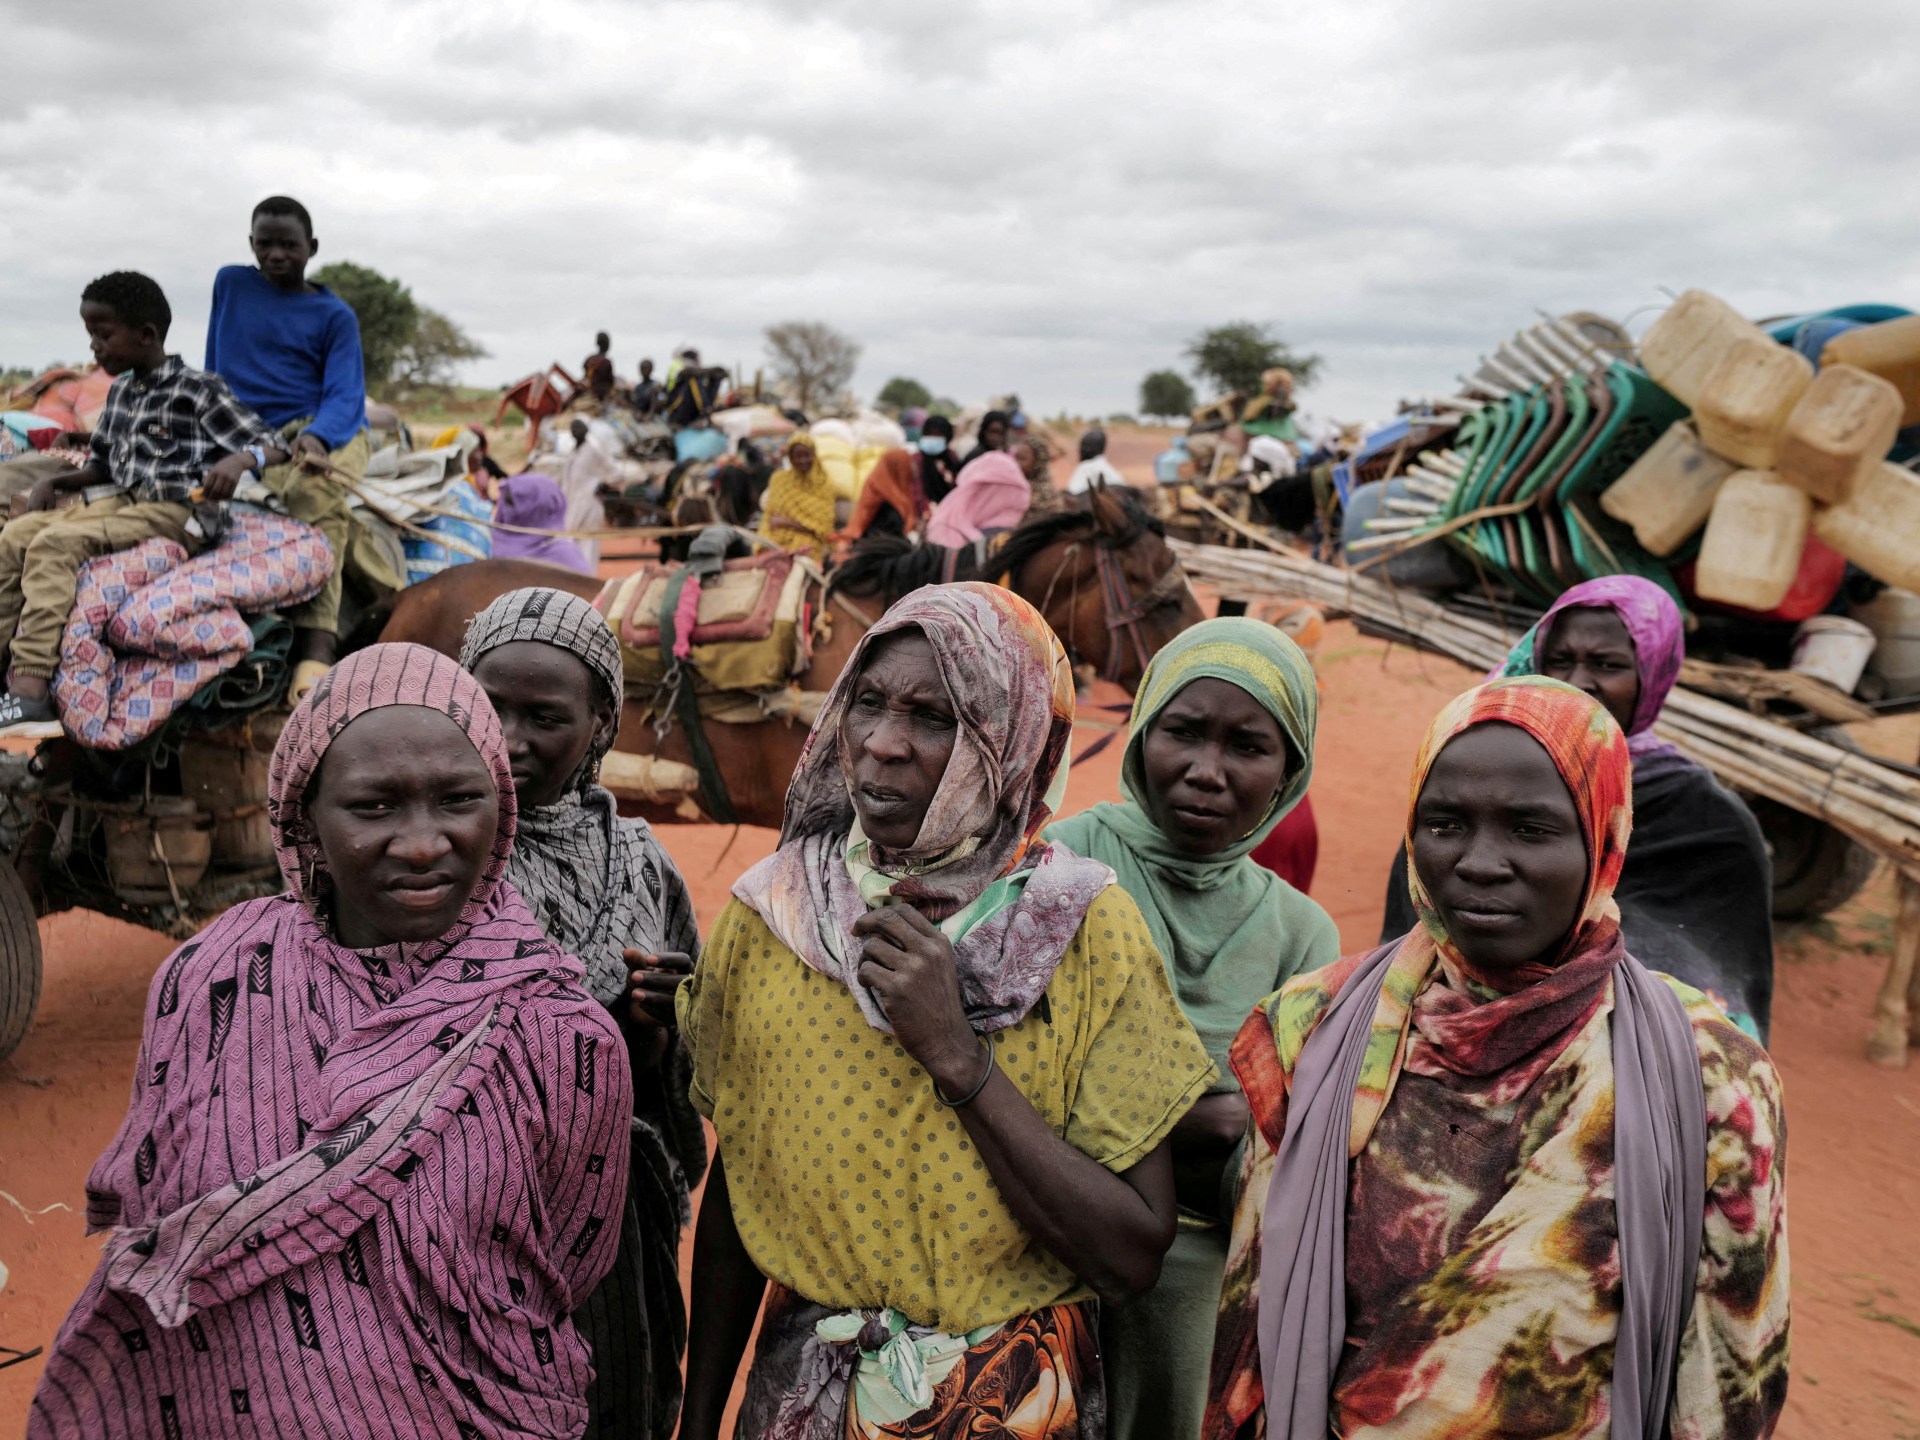 Violence in Sudan ‘borders on pure evil’, warns UN |  Humanitarian Crisis News